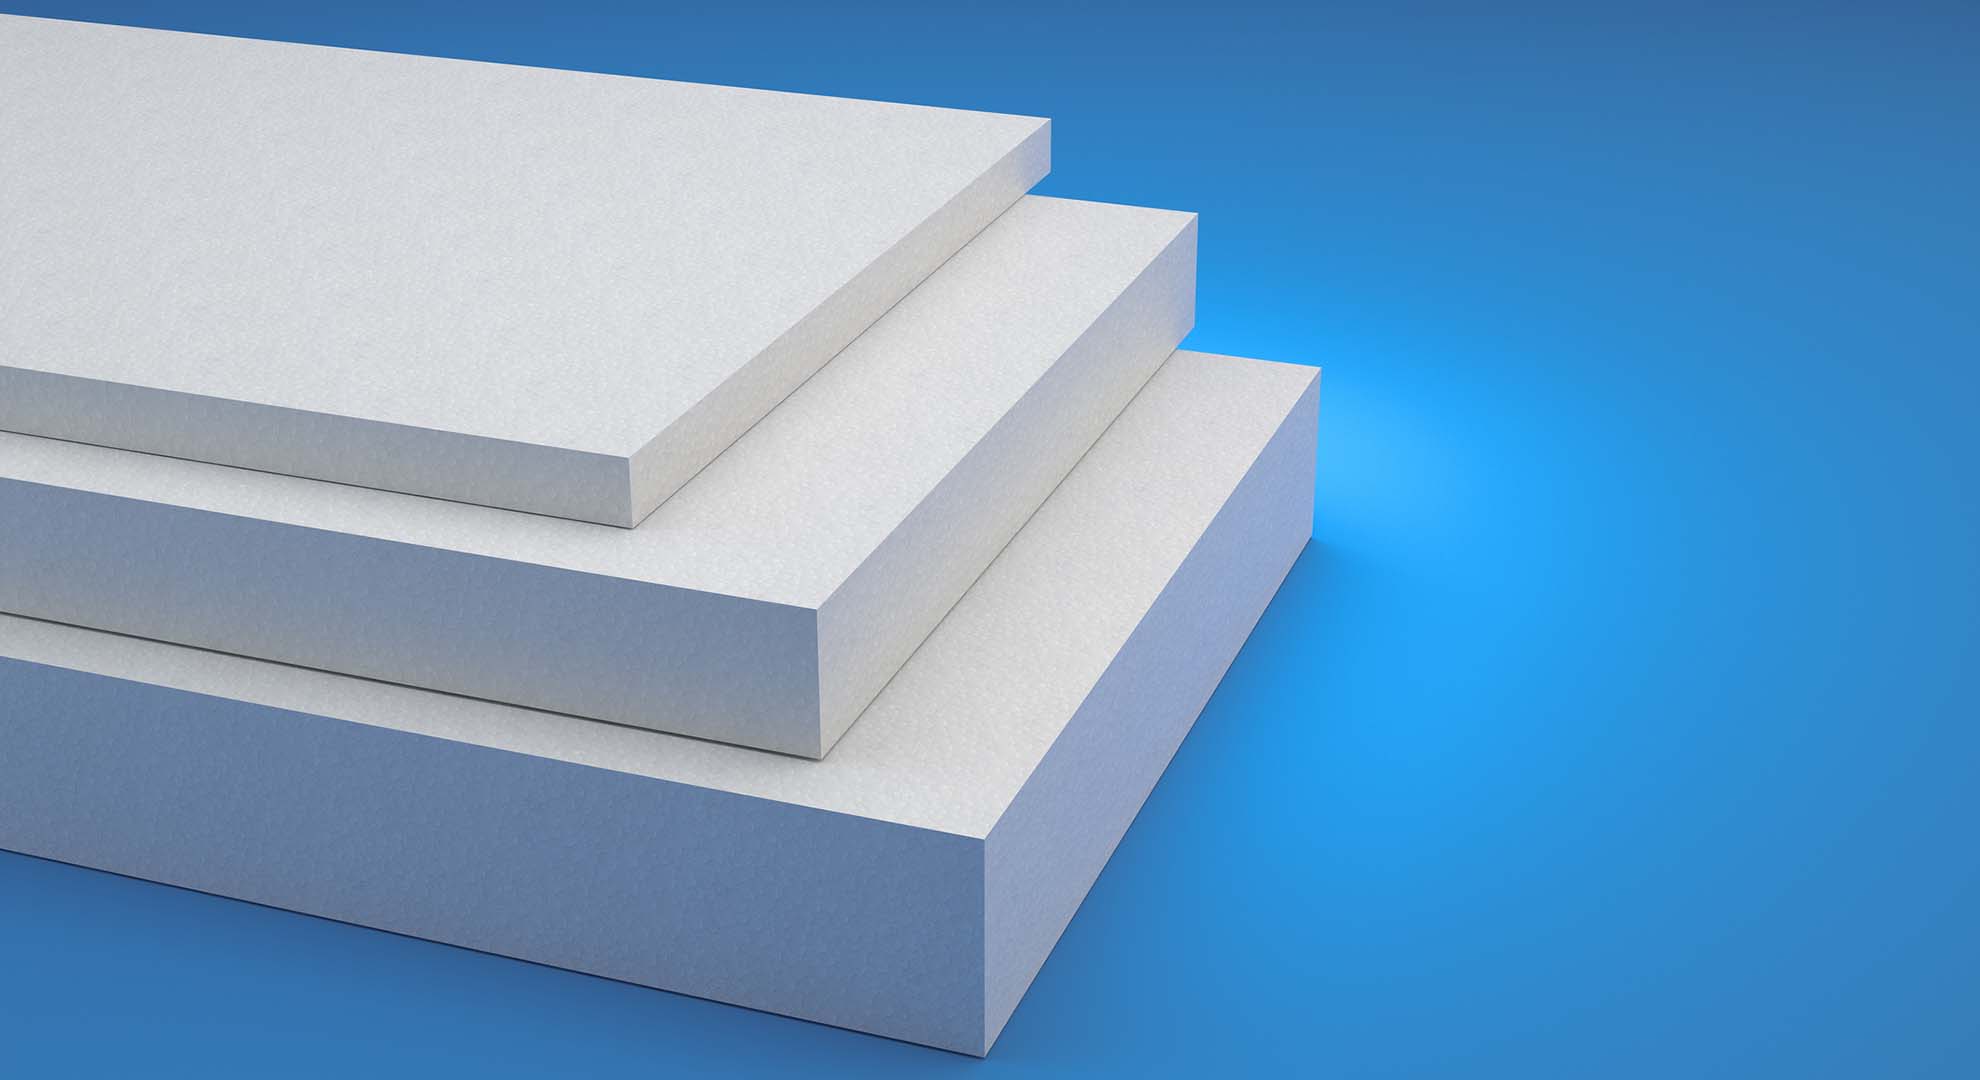 A stack of three styrofoam boards